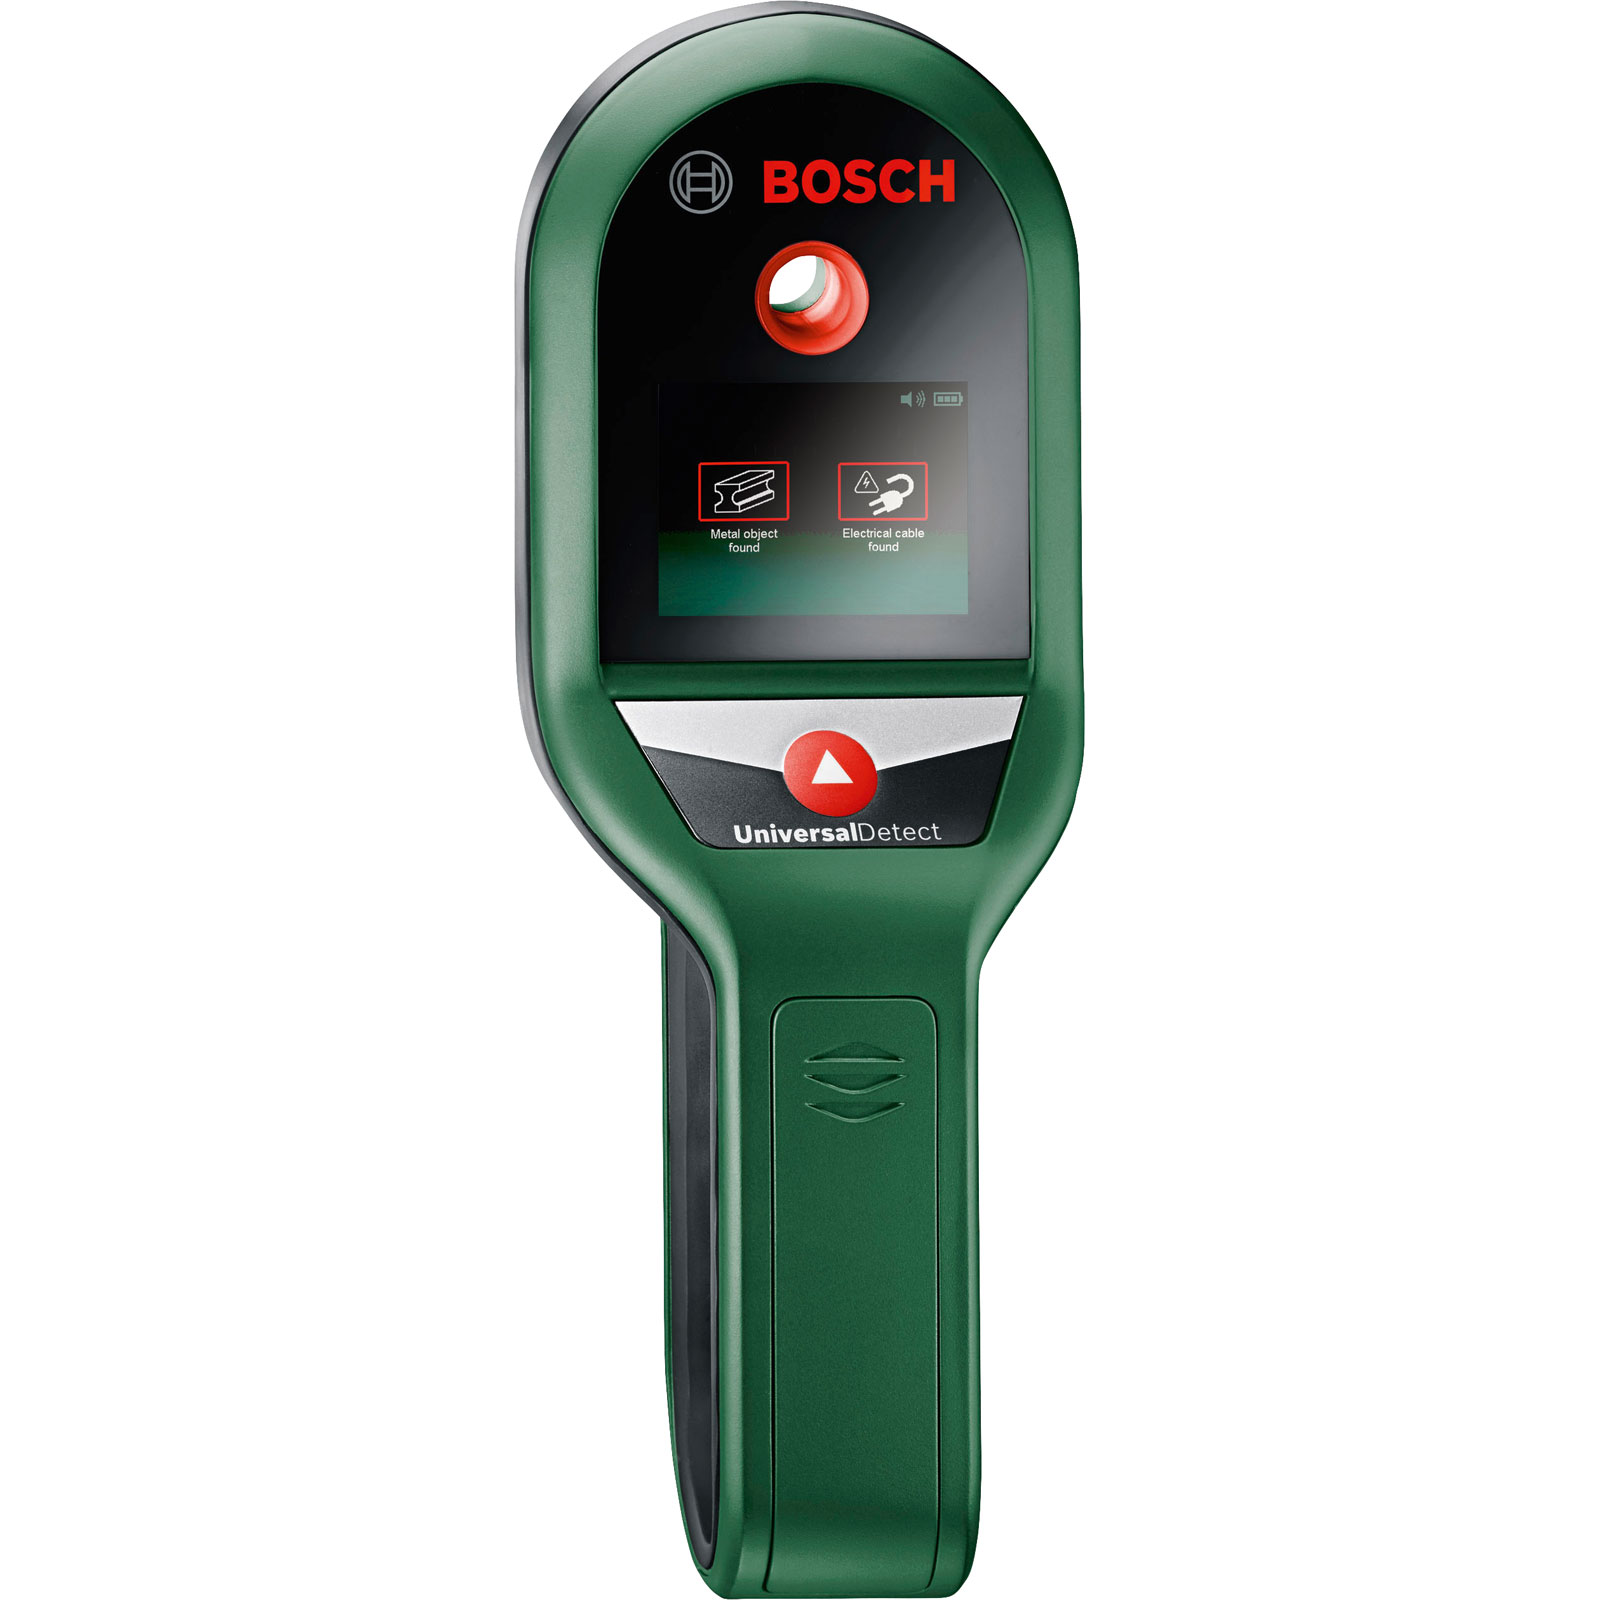 Bosch 0603681300 UniversalDetect Digital Detector